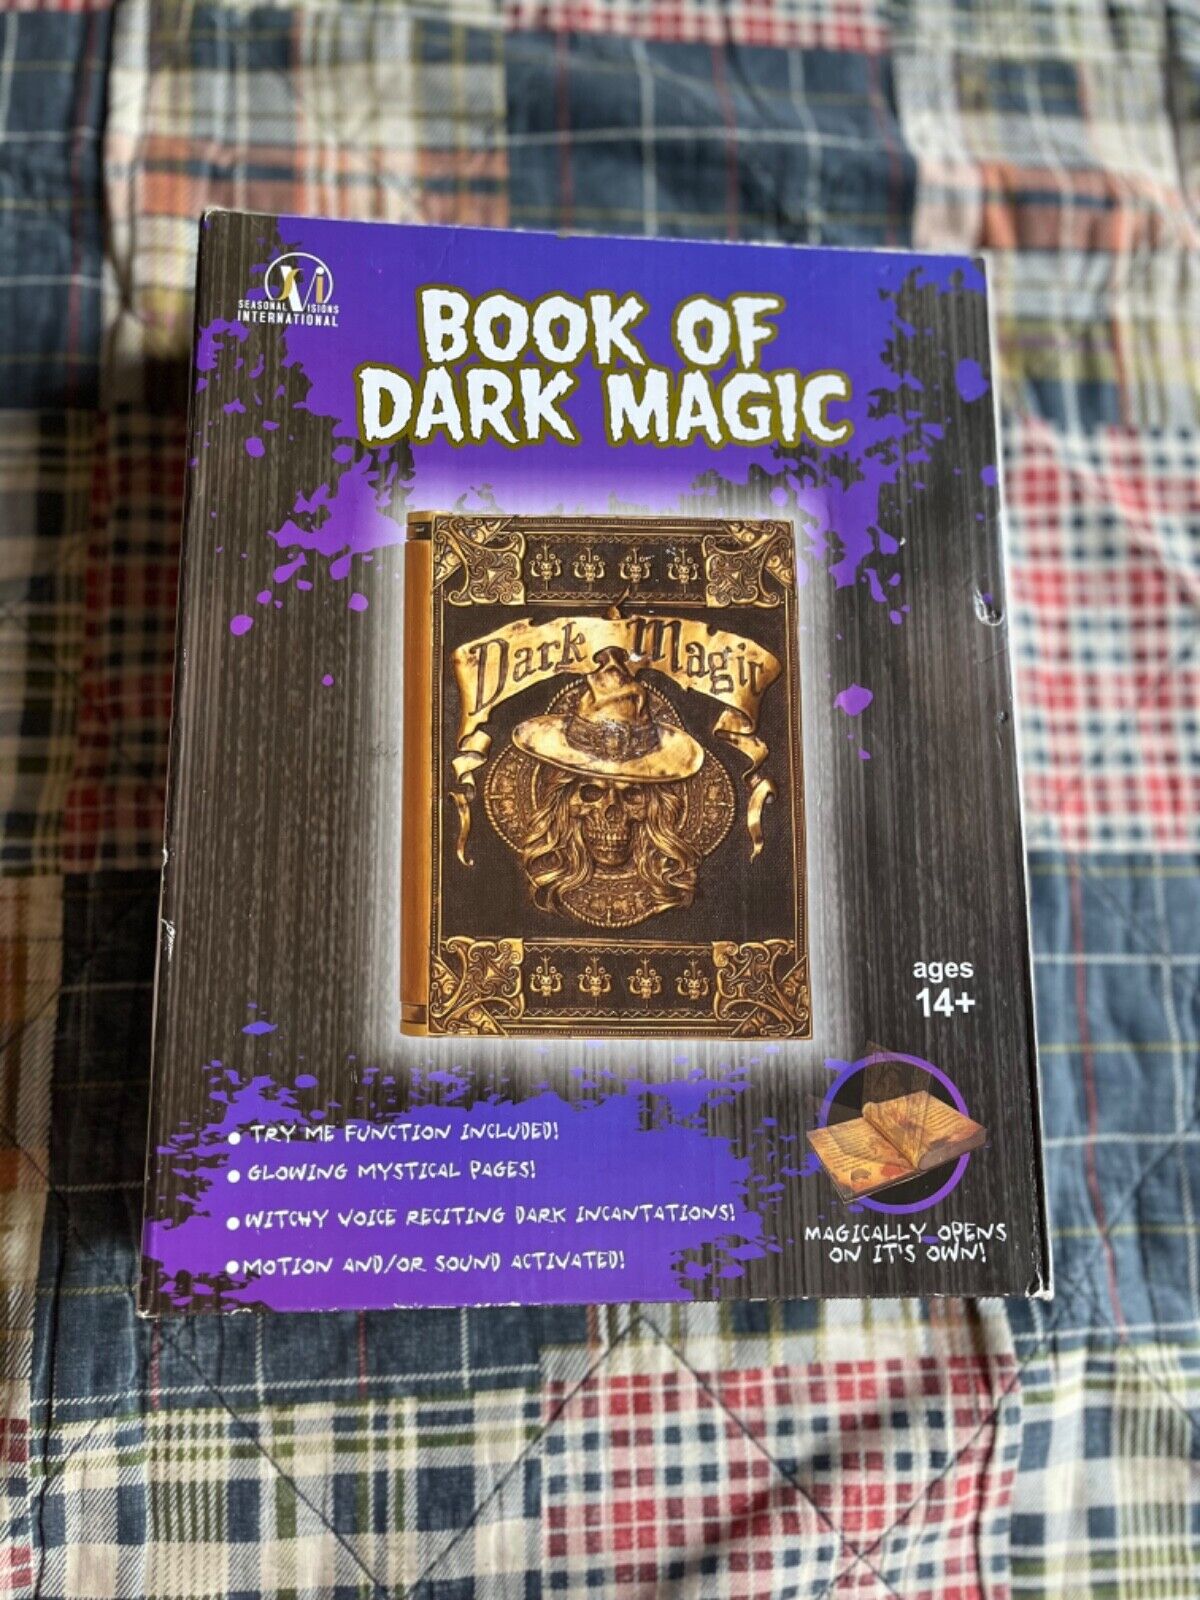 Seasonal Visions International Halloween Prop Book of Dark Magic Great Working